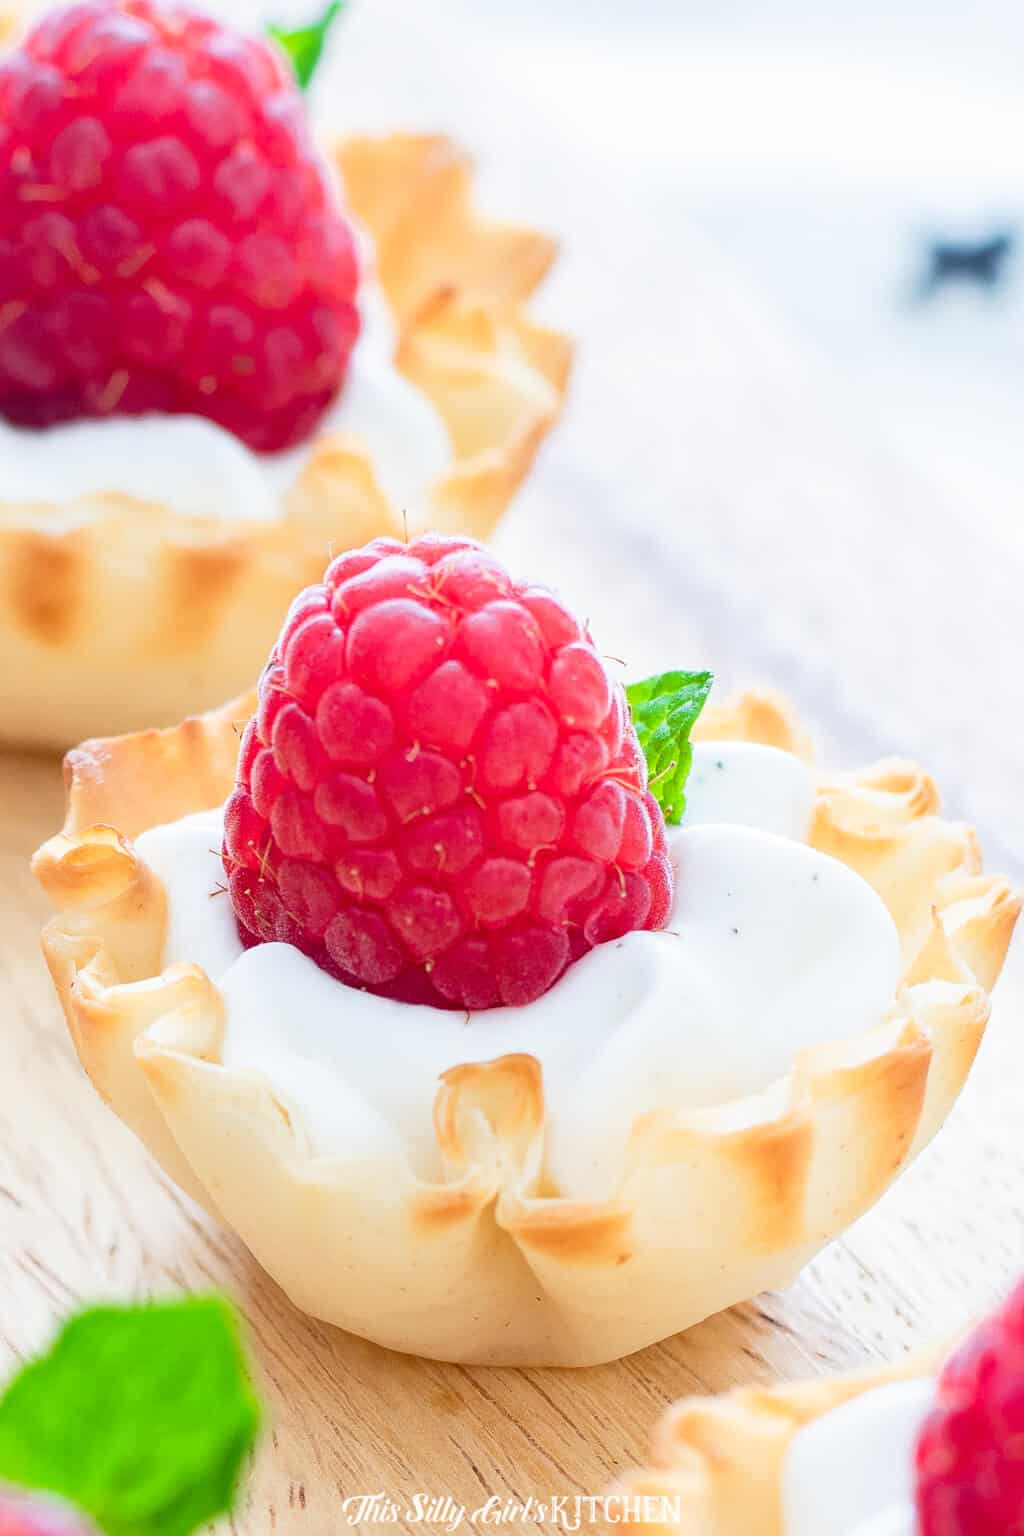 Raspberry Dessert Cups, a simple and easy make-ahead dessert perfect for entertaining! #recipe from thissillygirlskitchen.com #raspberry #dessert #raspberrydessert #whippedcream #lemon #raspberrylemon #raspberrydessertcups